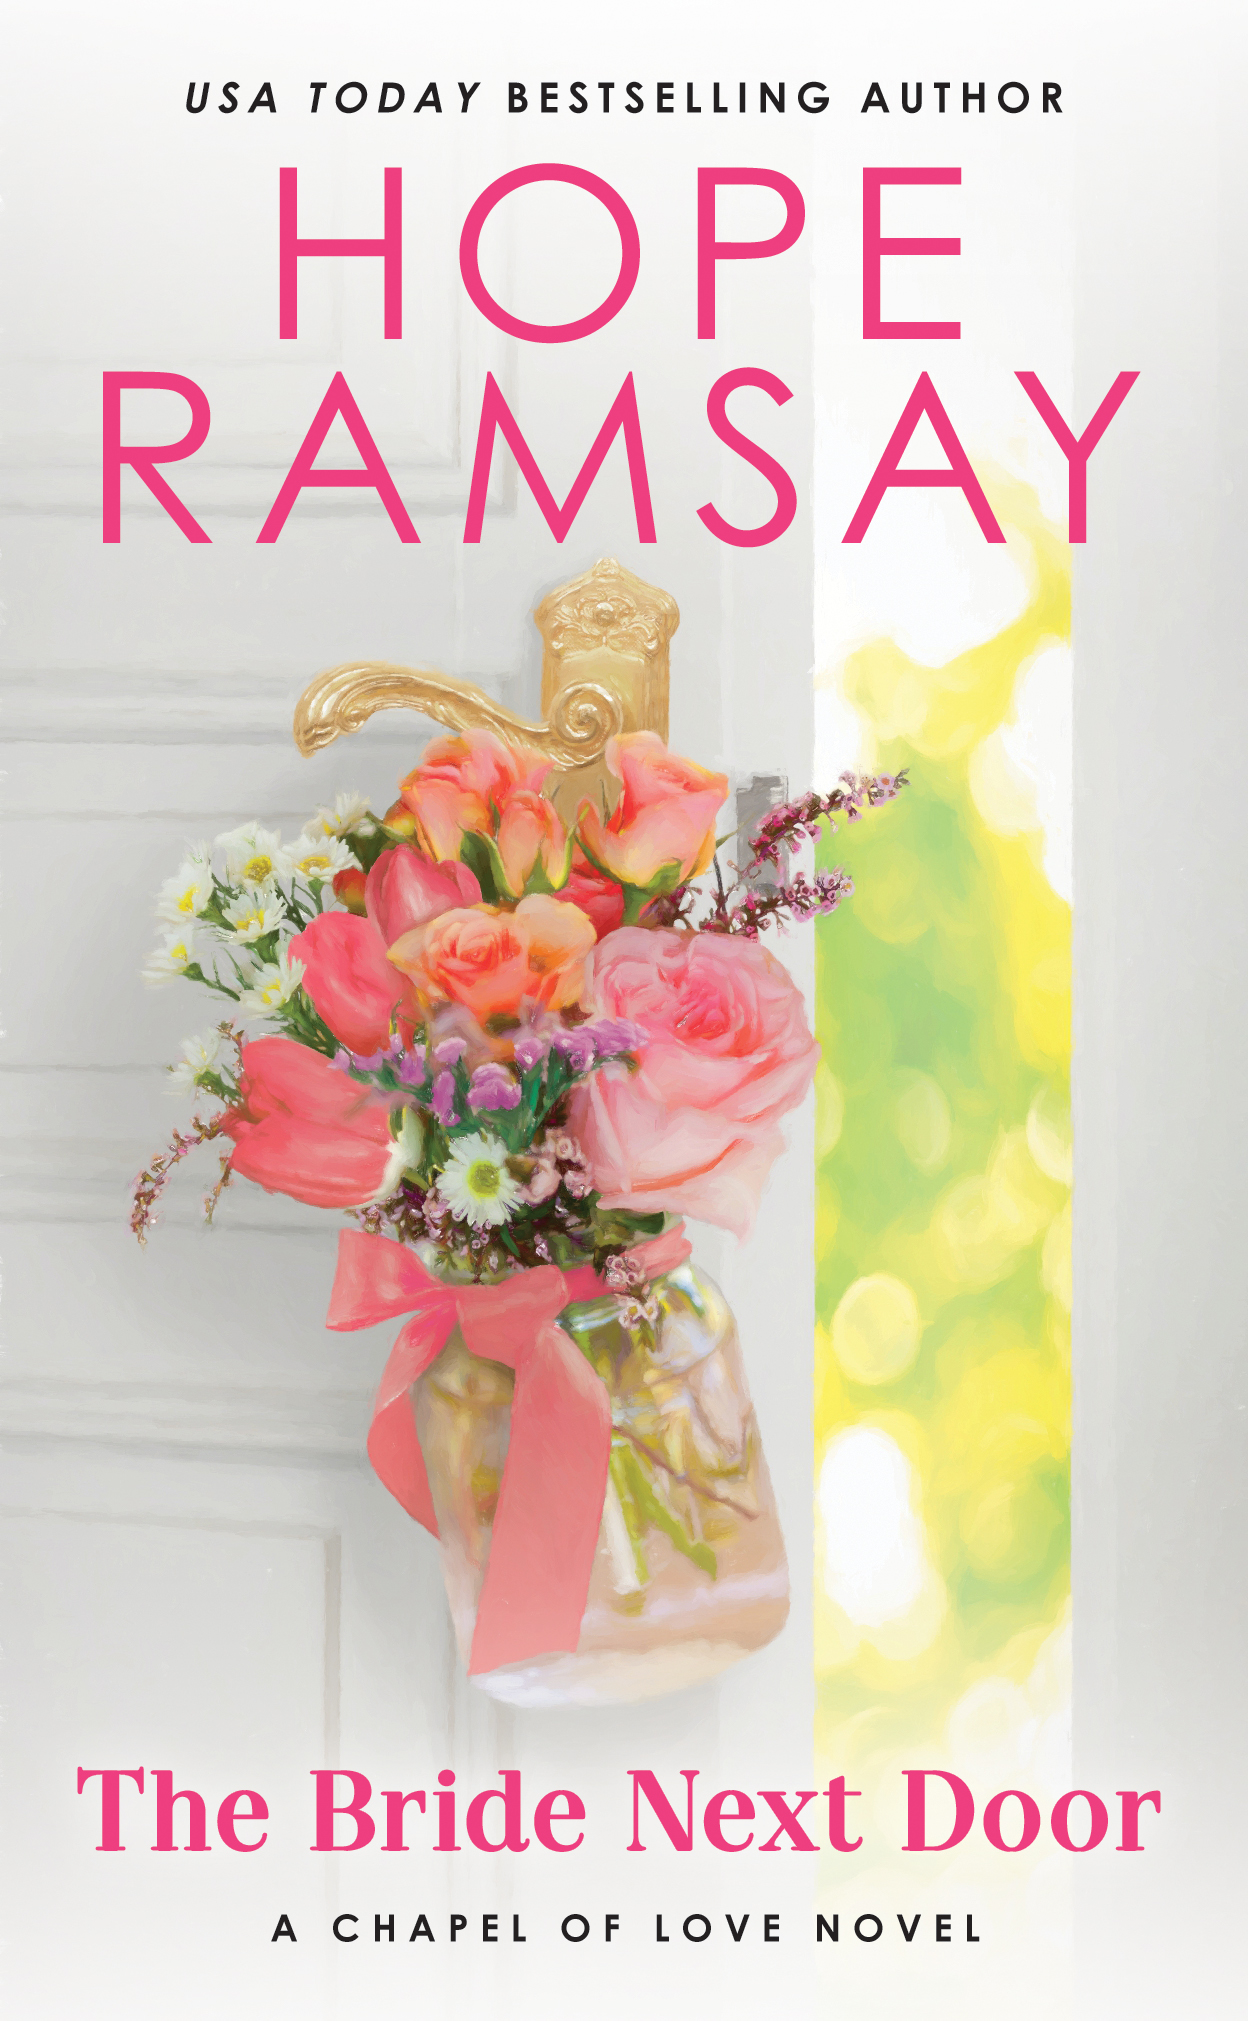 The Bride Next Door by Hope Ramsay